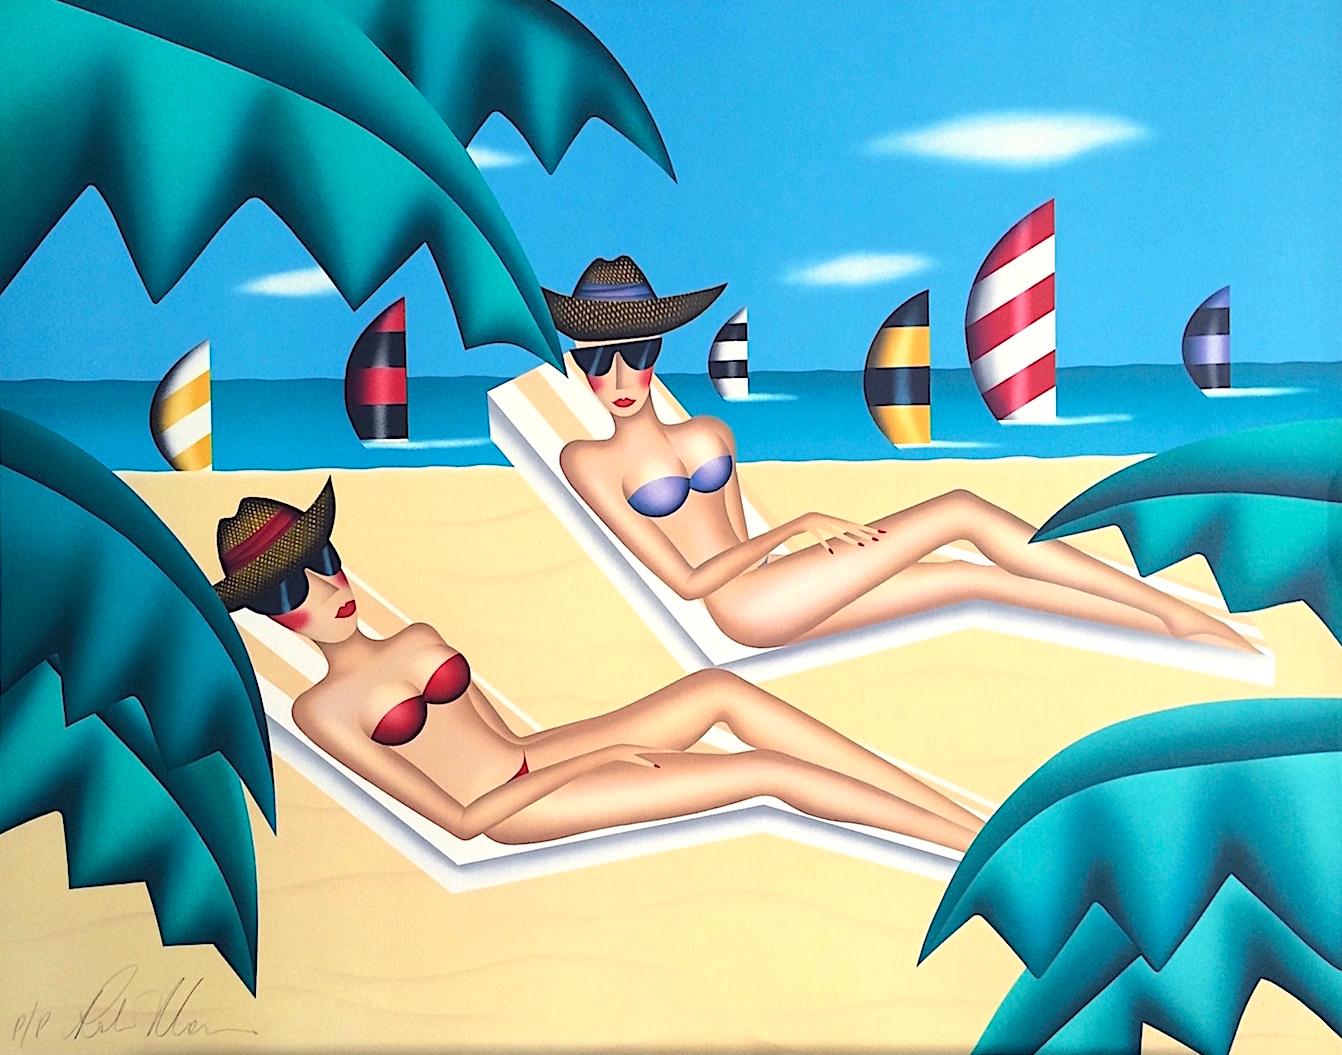 Robin Morris Landscape Print - SUNBATHERS Signed Lithograph, Women in Bikinis, Sunglasses, Beach, Sailboats